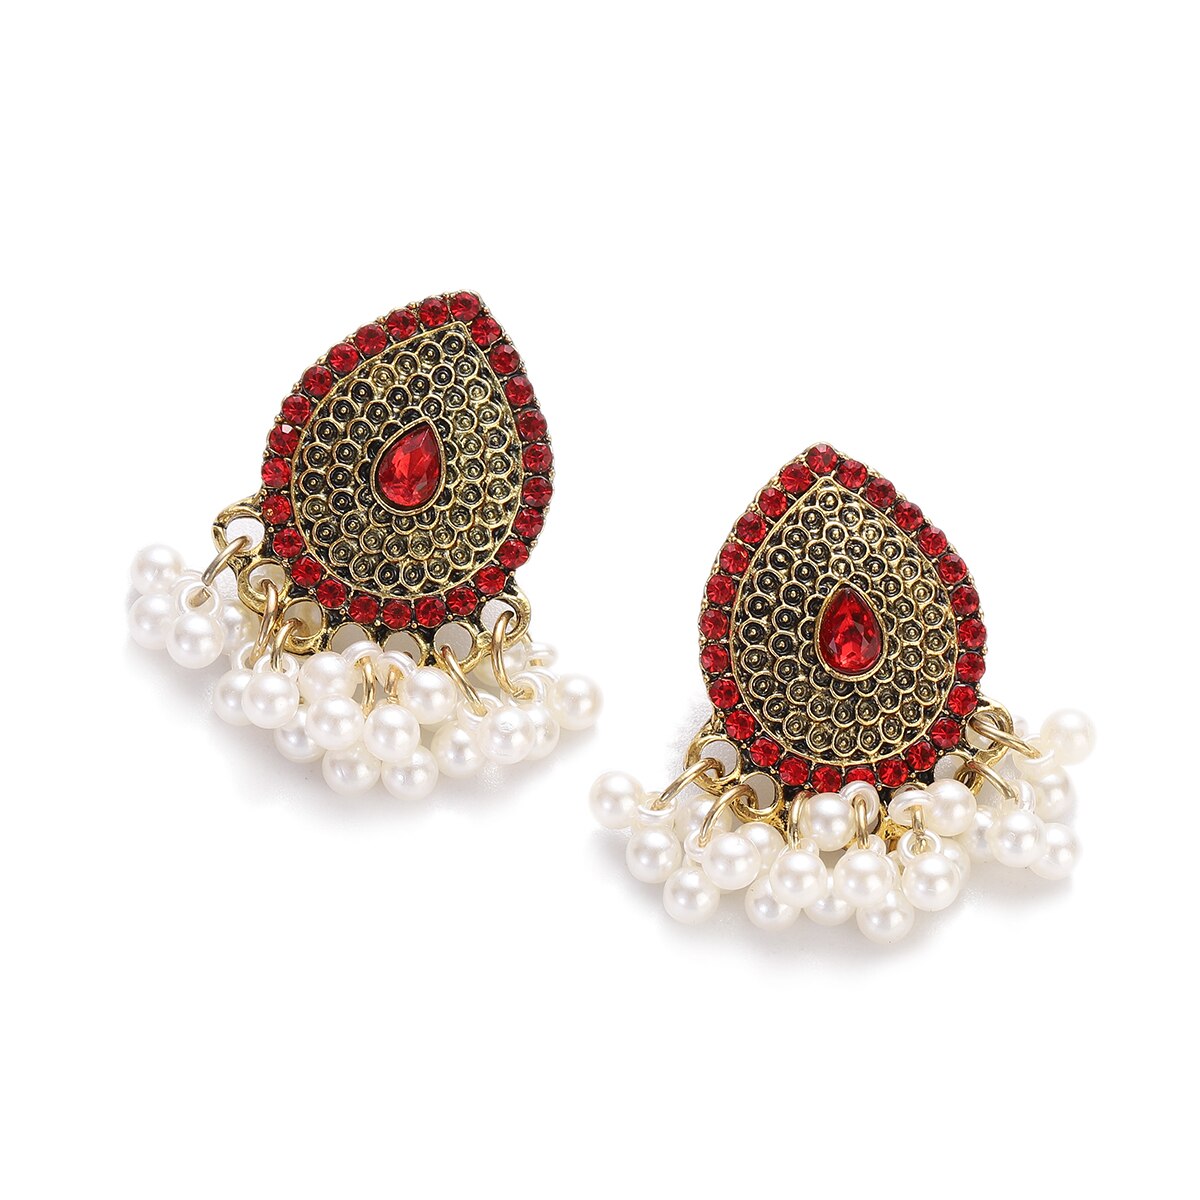 Luxury-White-CZ-Water-Drop-Earrings-For-Women-Ethnic-Vintage-Bohemian-Gold-Color-Statement-Earrings-1005004700736114-6